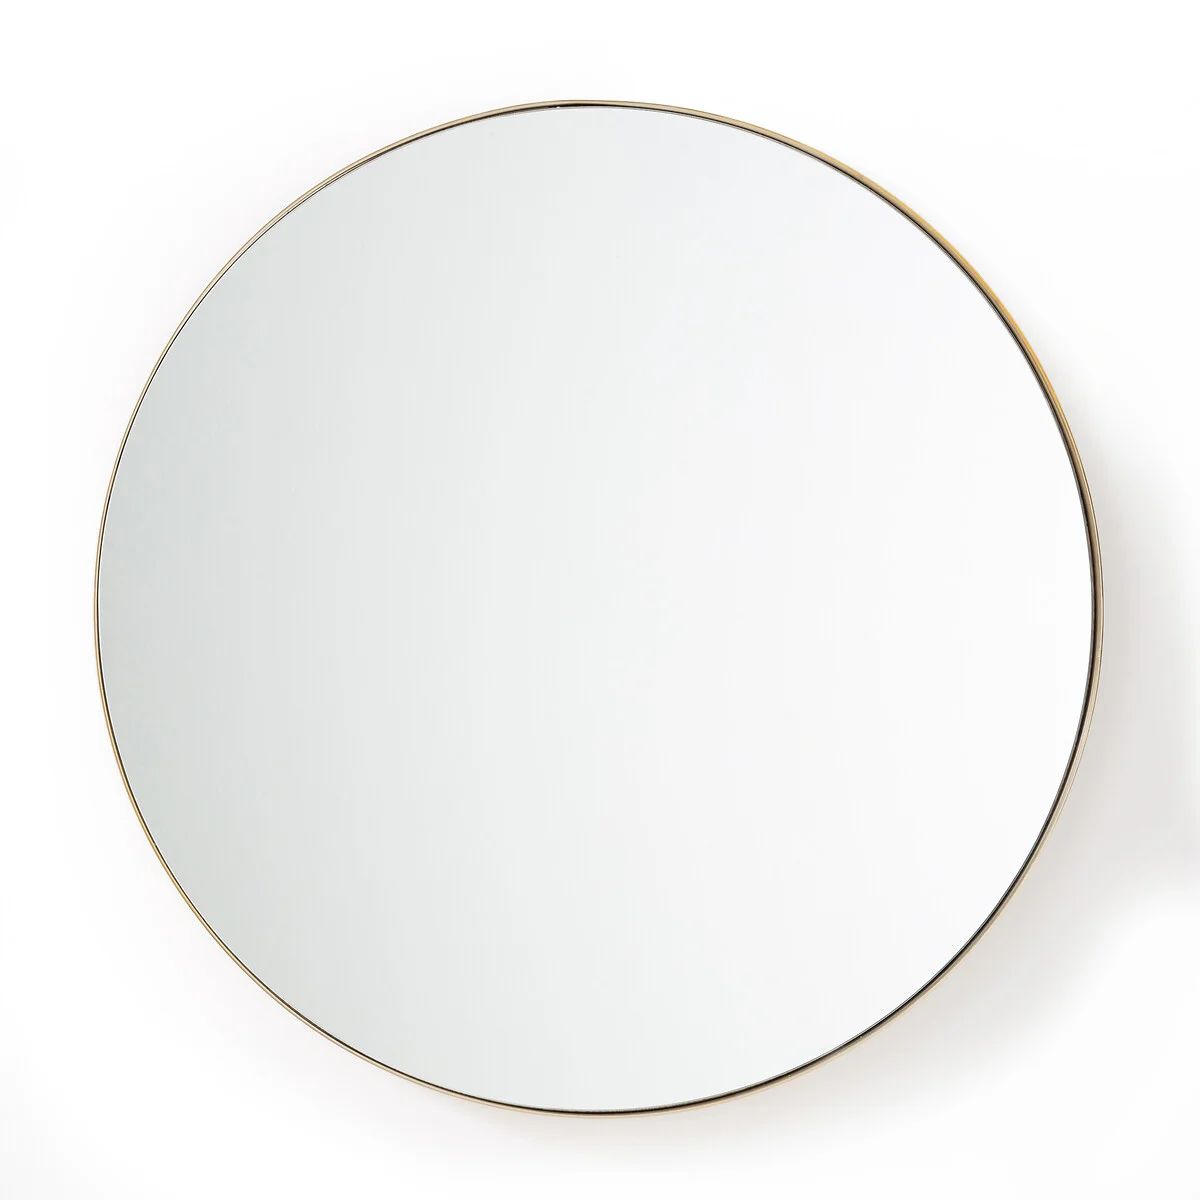 Iodus Round Mirror with Brass Frame, 90cm | La Redoute (UK)